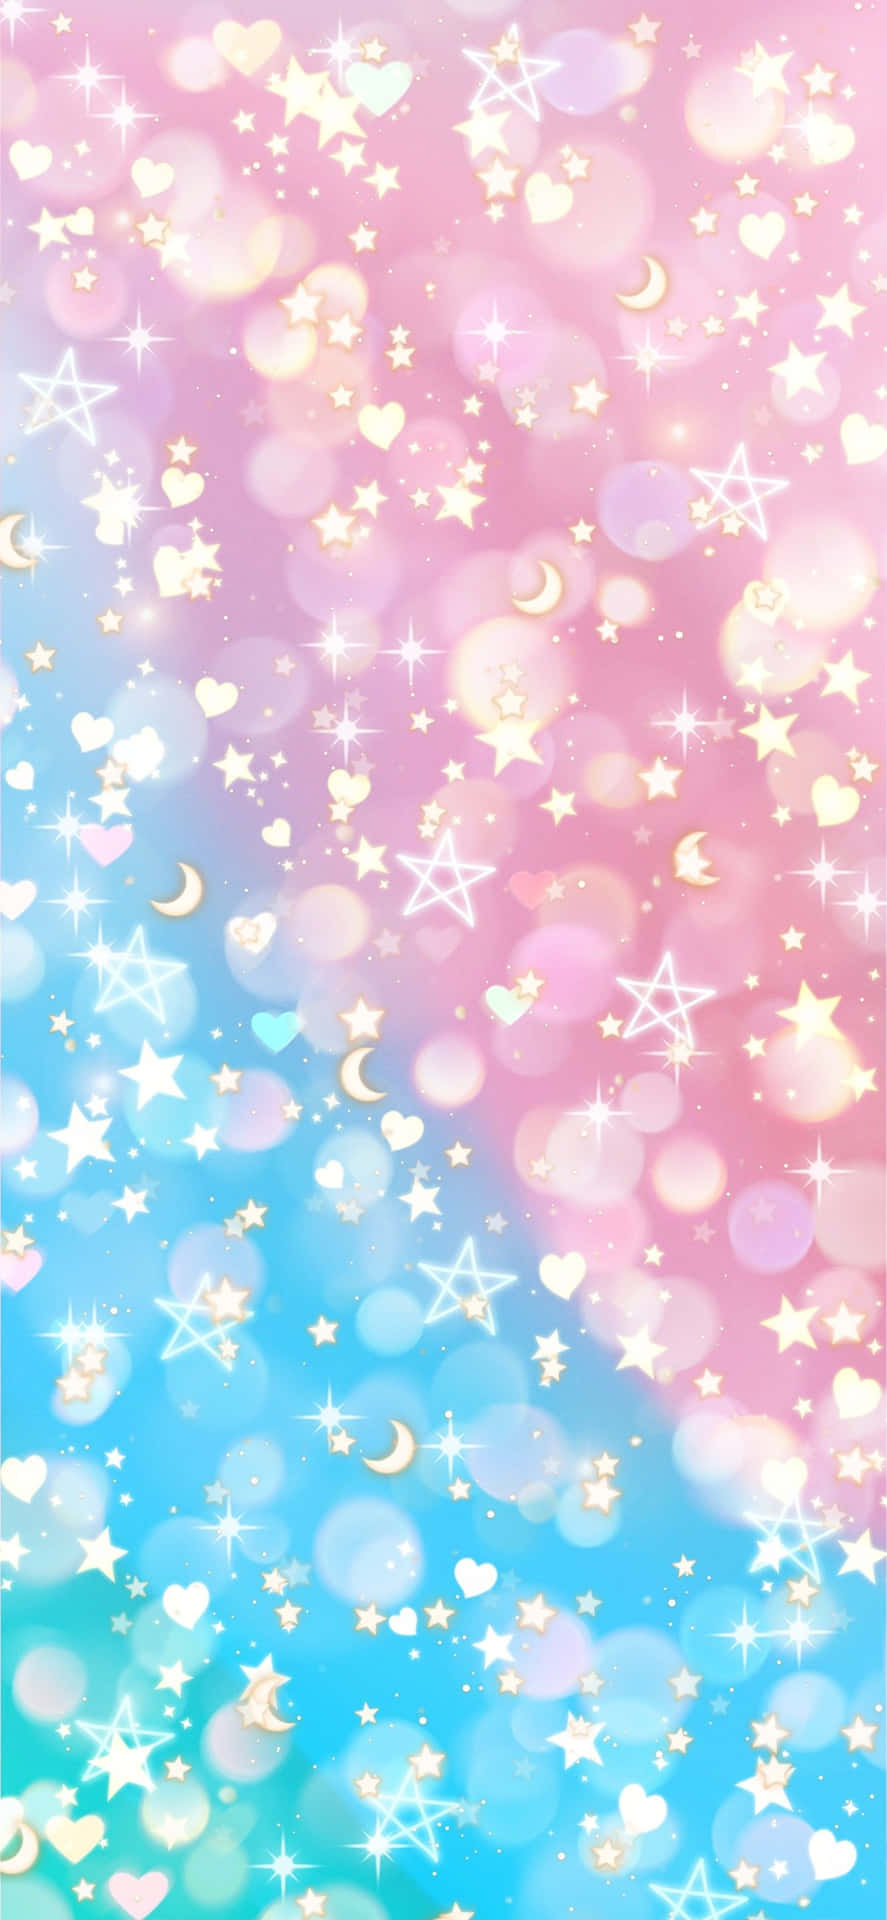 Pink And Blue Cute Stars Digital Art Wallpaper